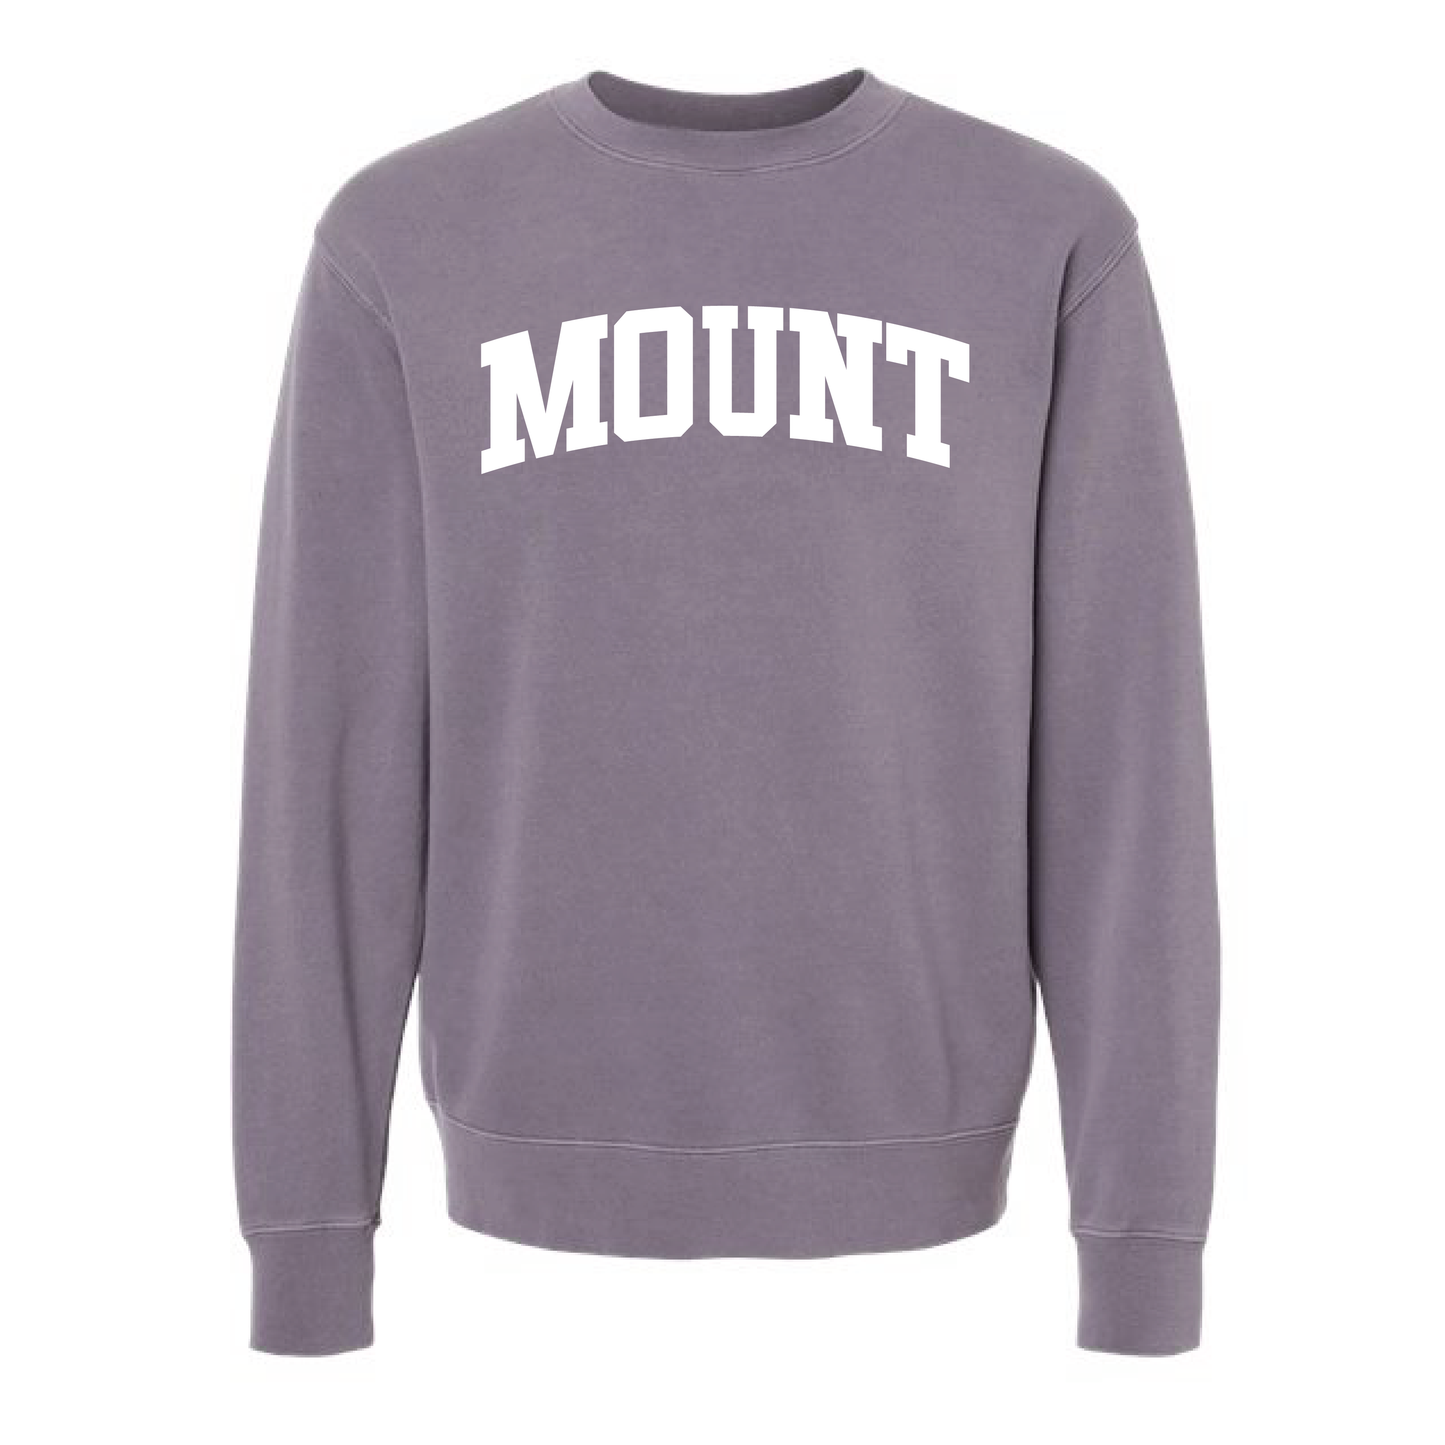 Mount Arch Vintage Adult Sweatshirt